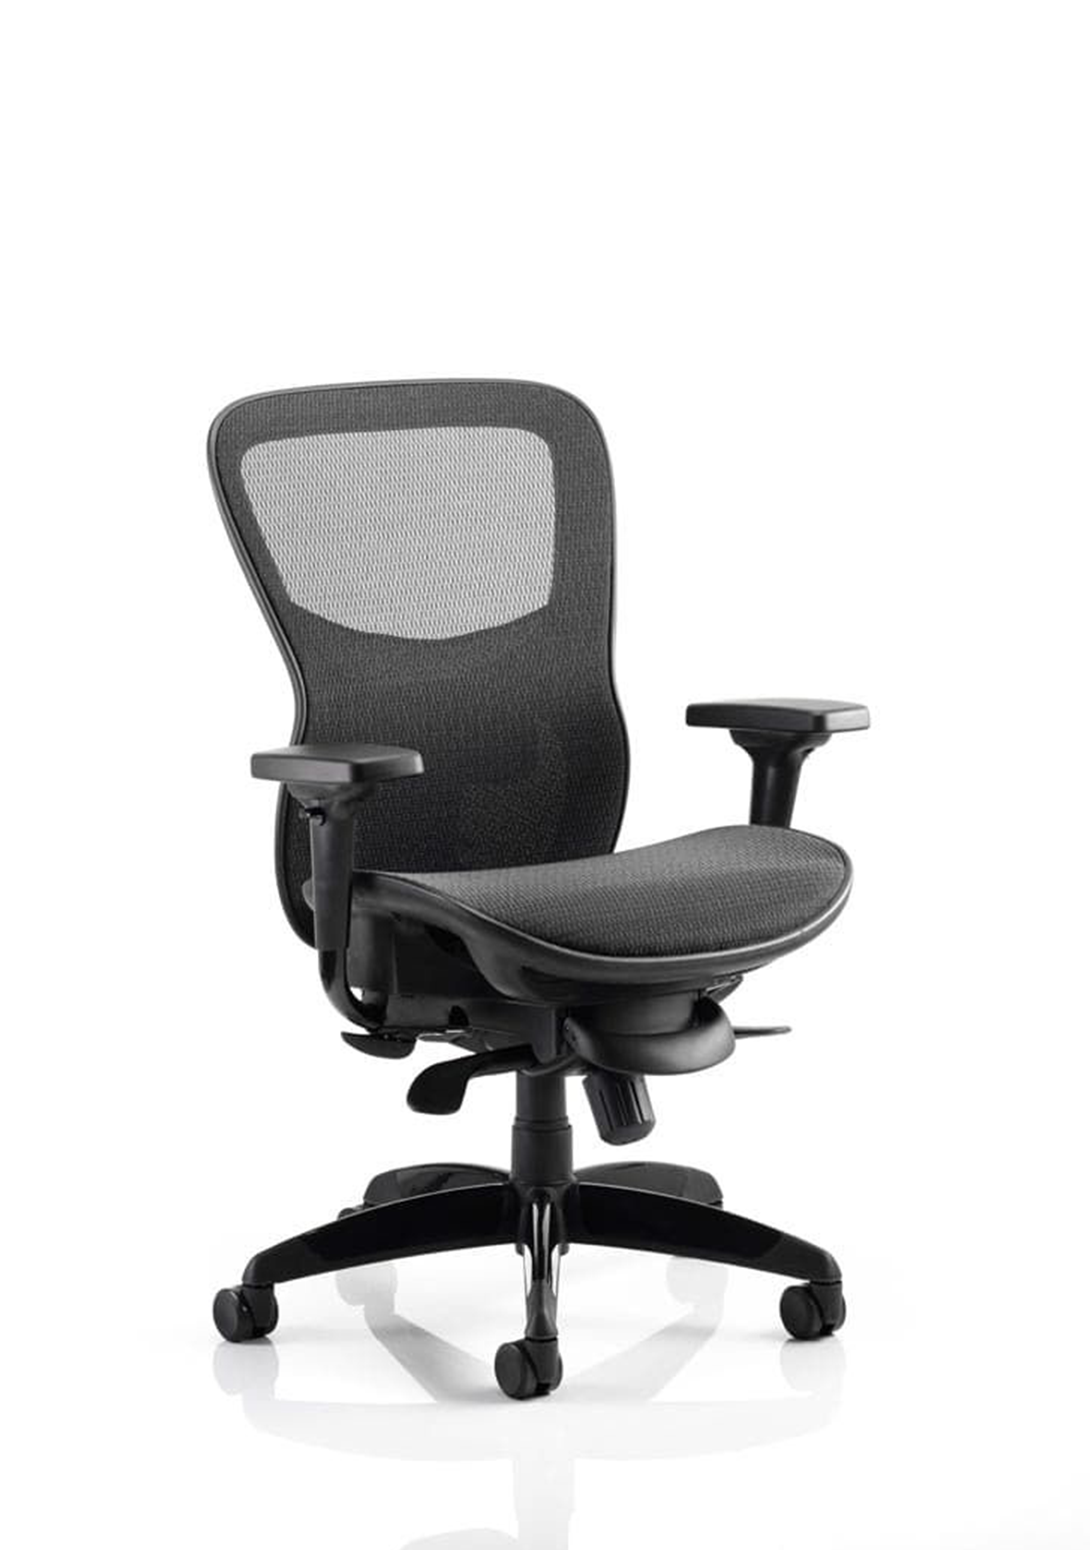 Stealth Posture Chair